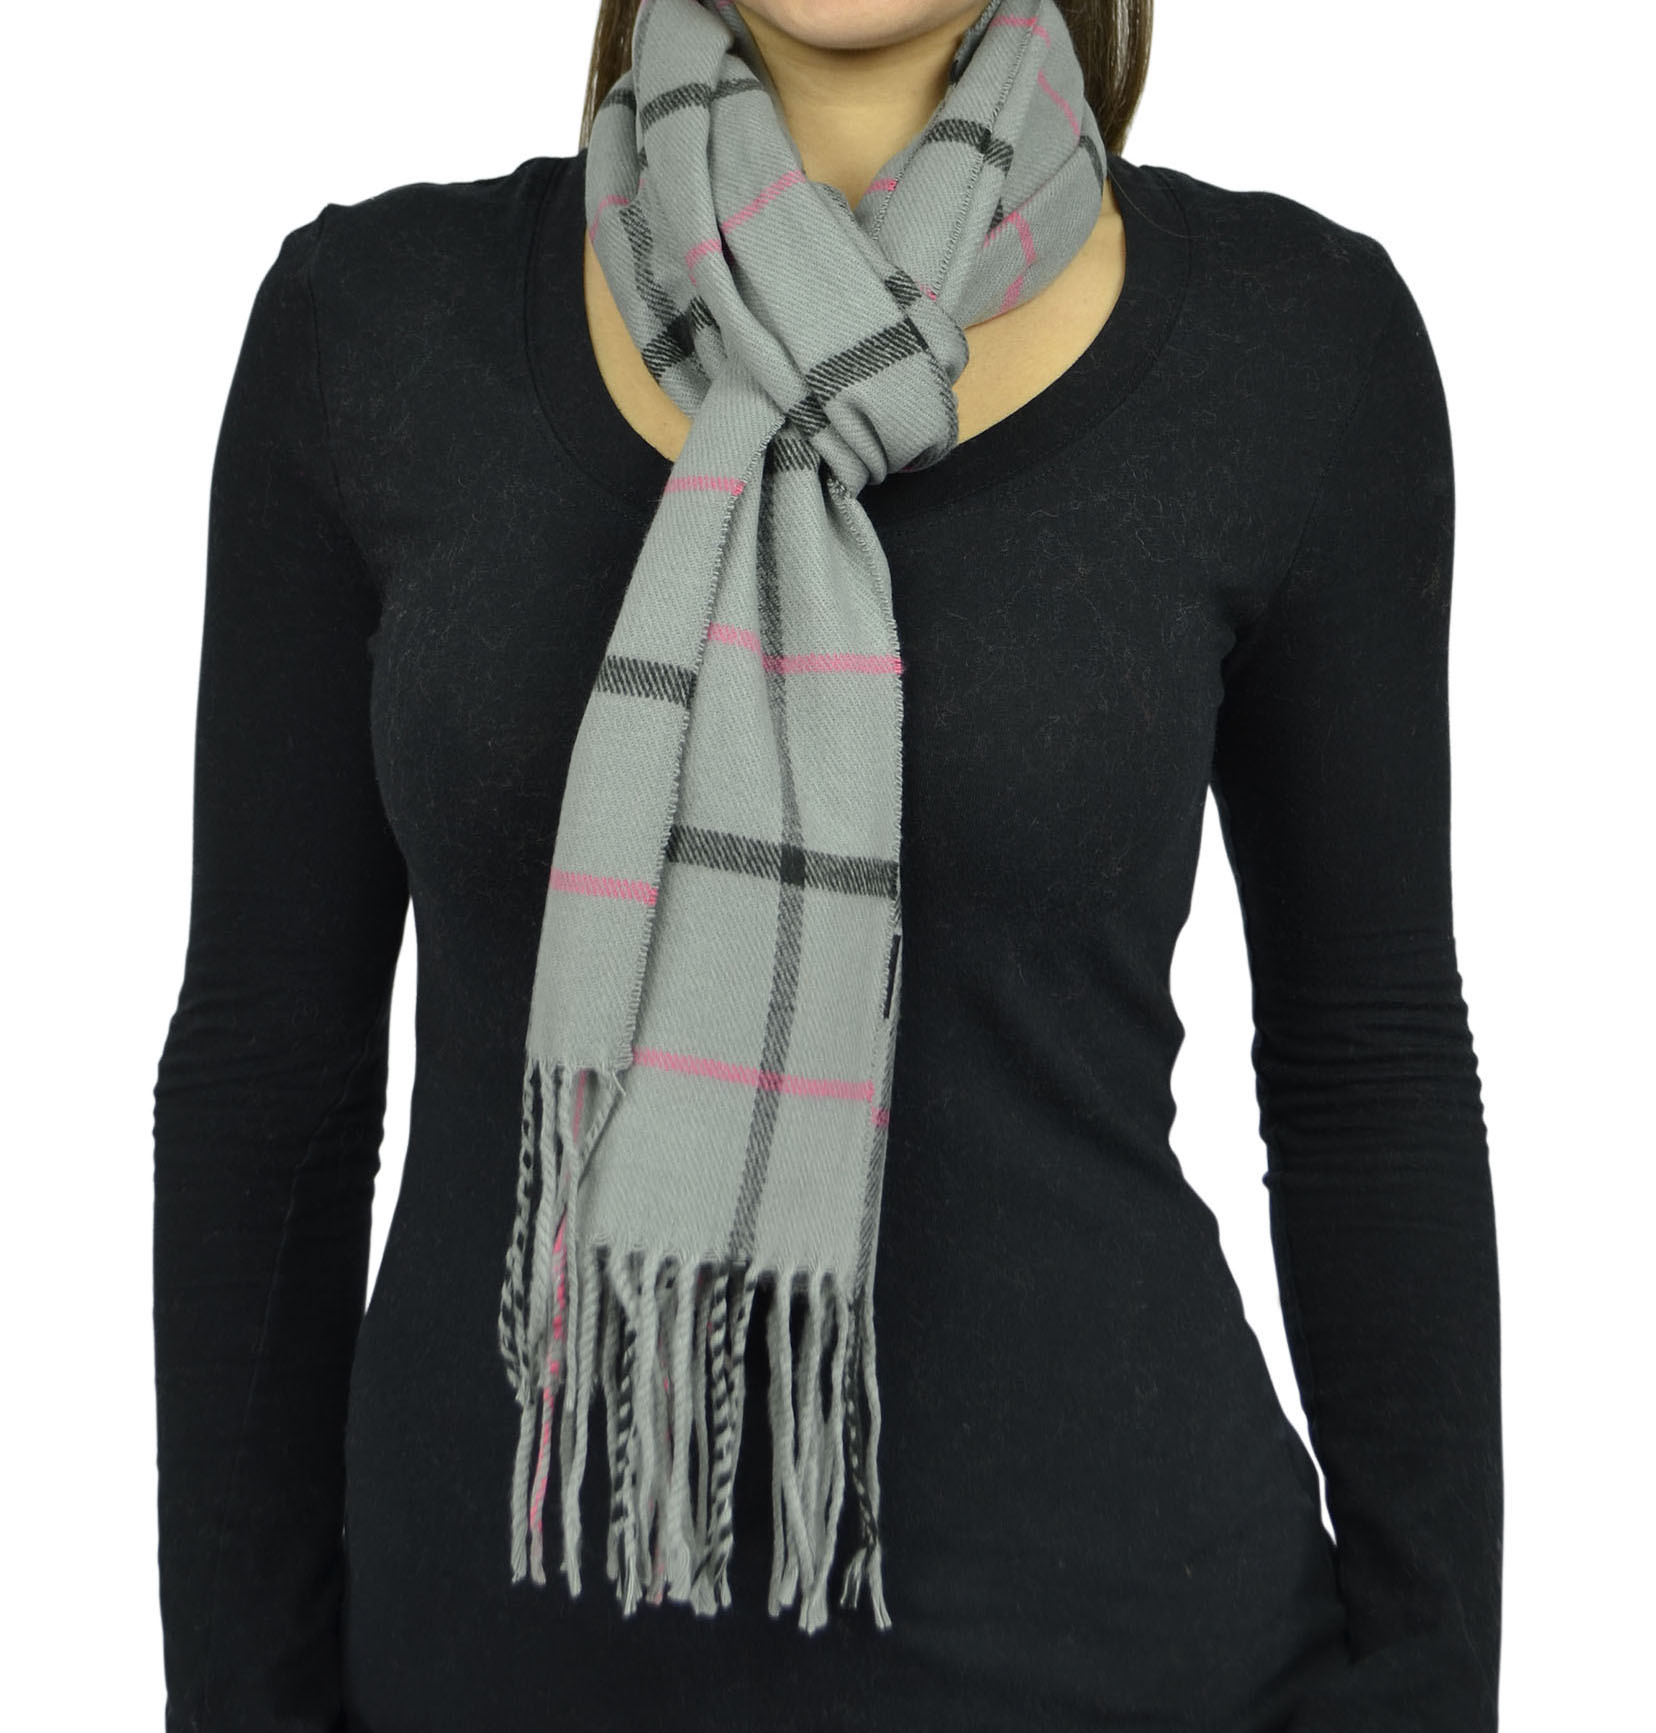 Belle Donne- Unisex Cashmere Feel Scarf - Plaid / Warm Winter Fashion Scarves - Gray